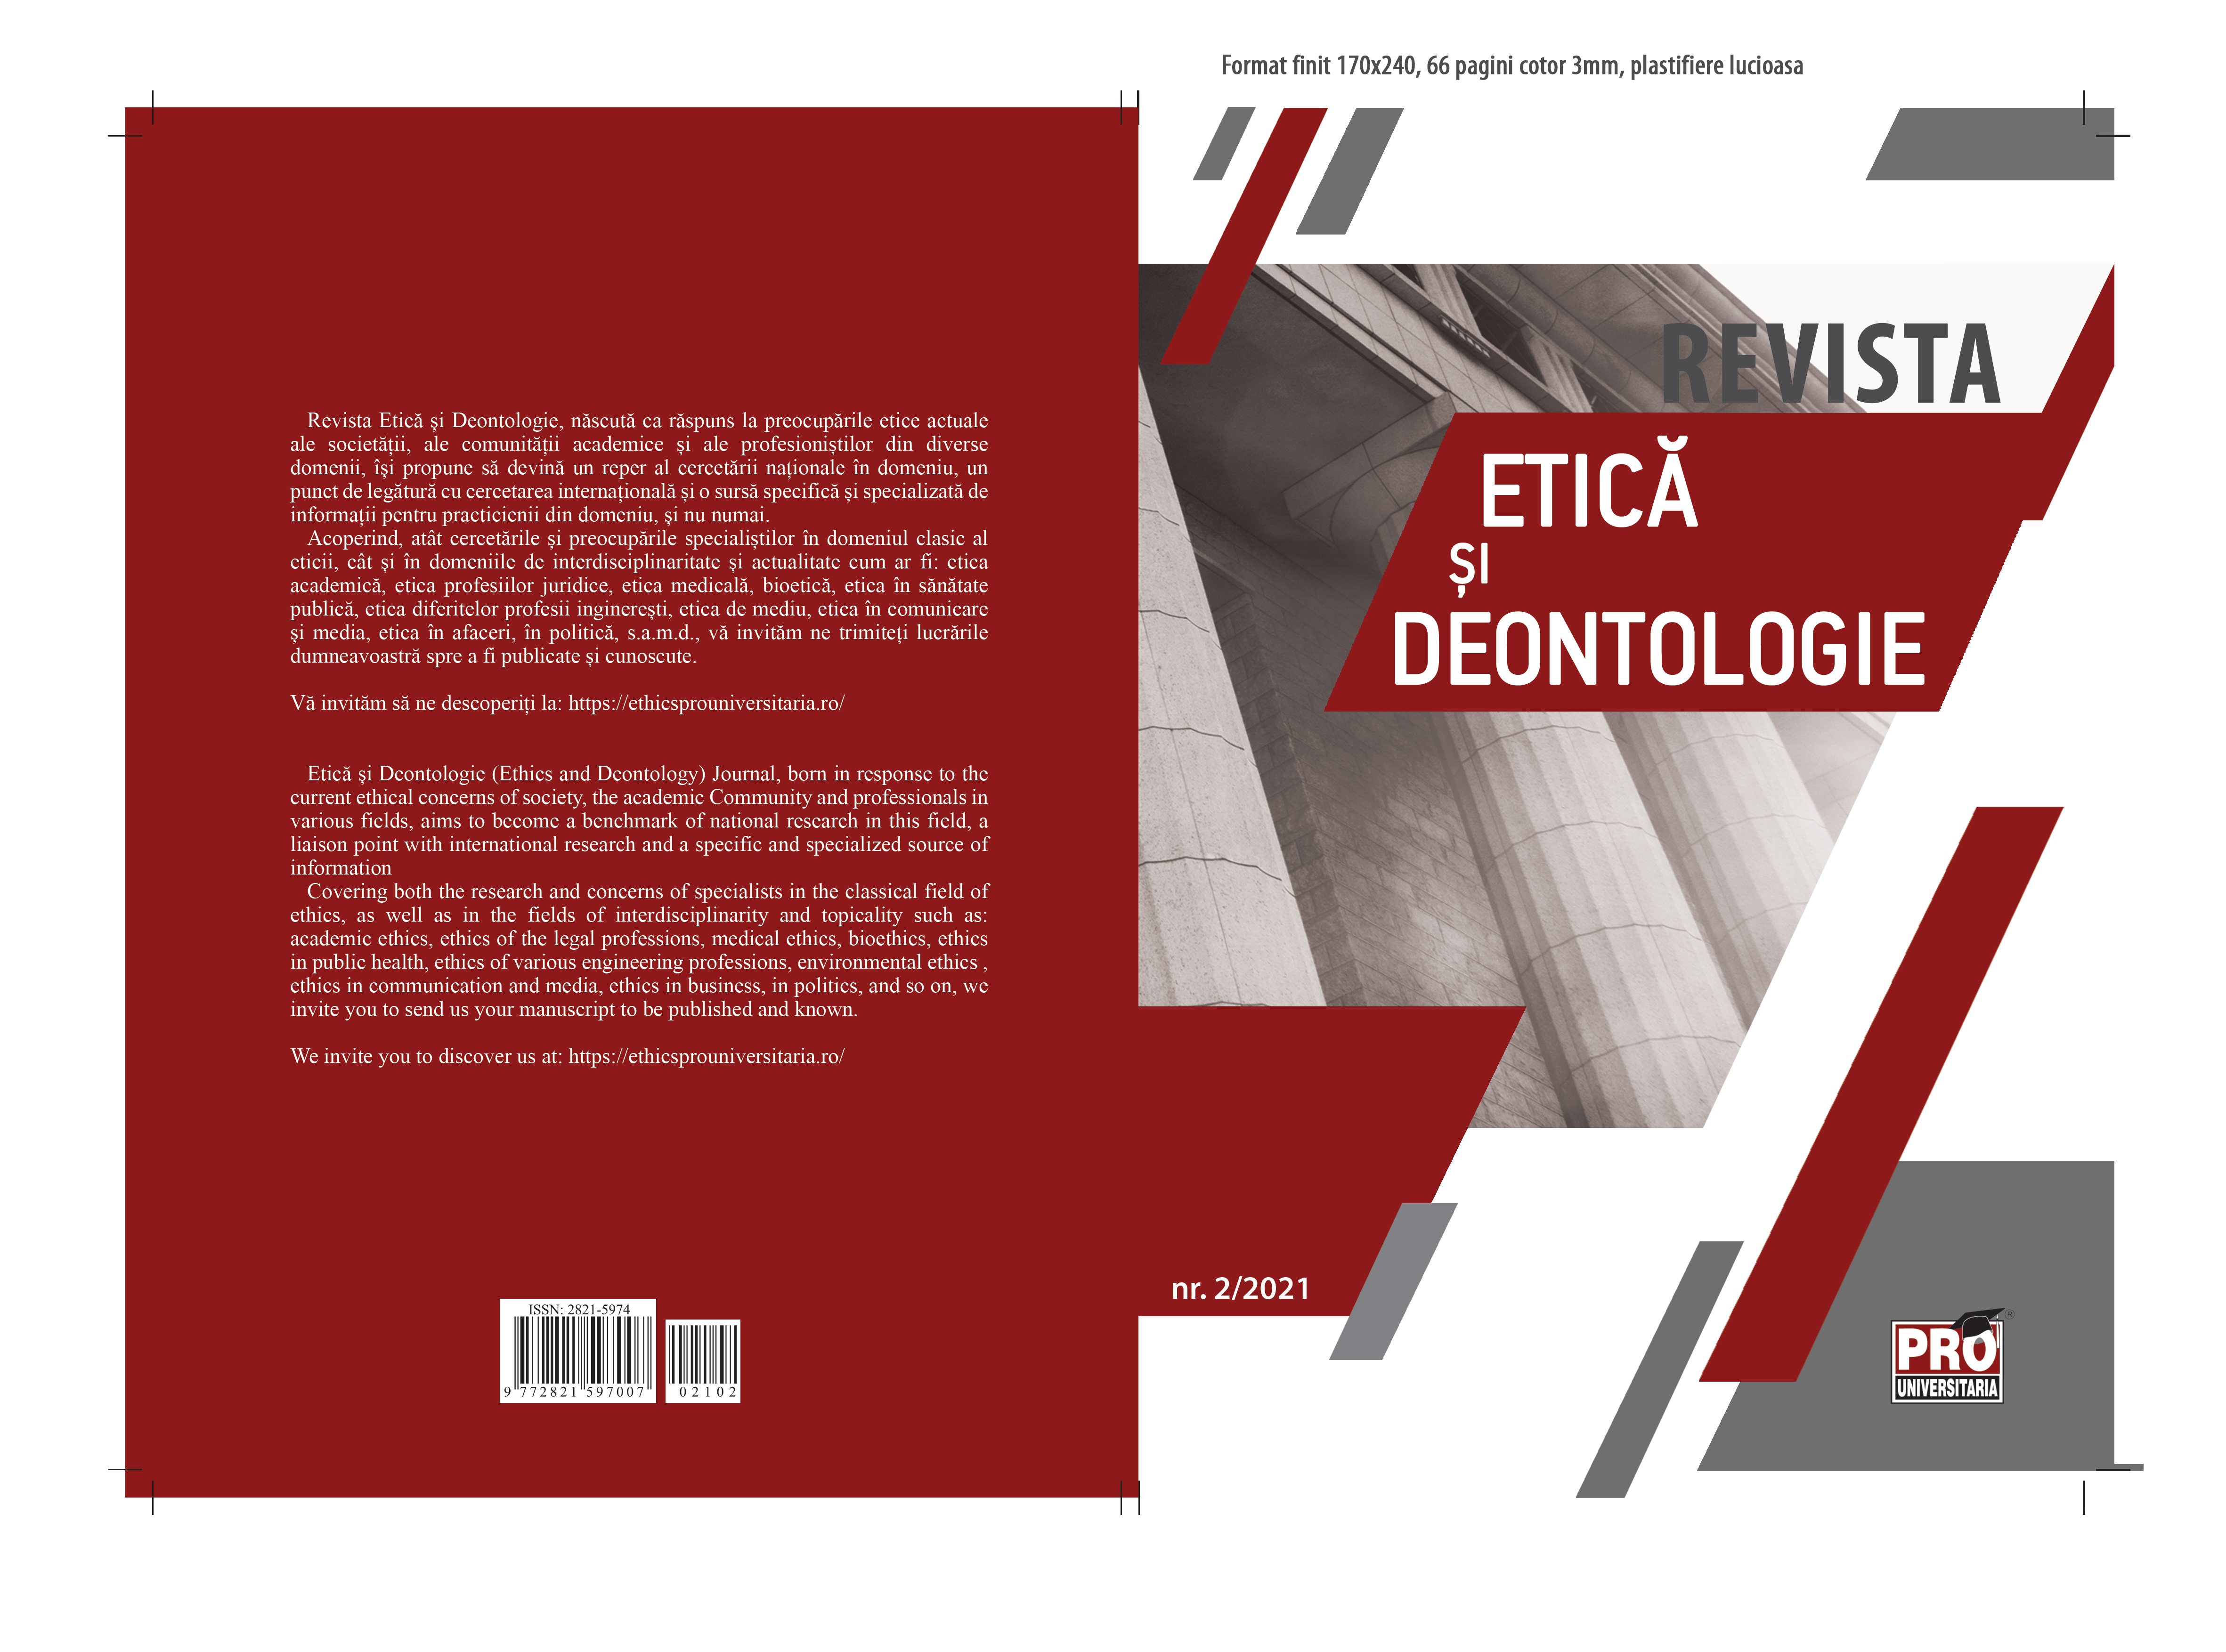 Scientometric study regardings ethics in professional activities